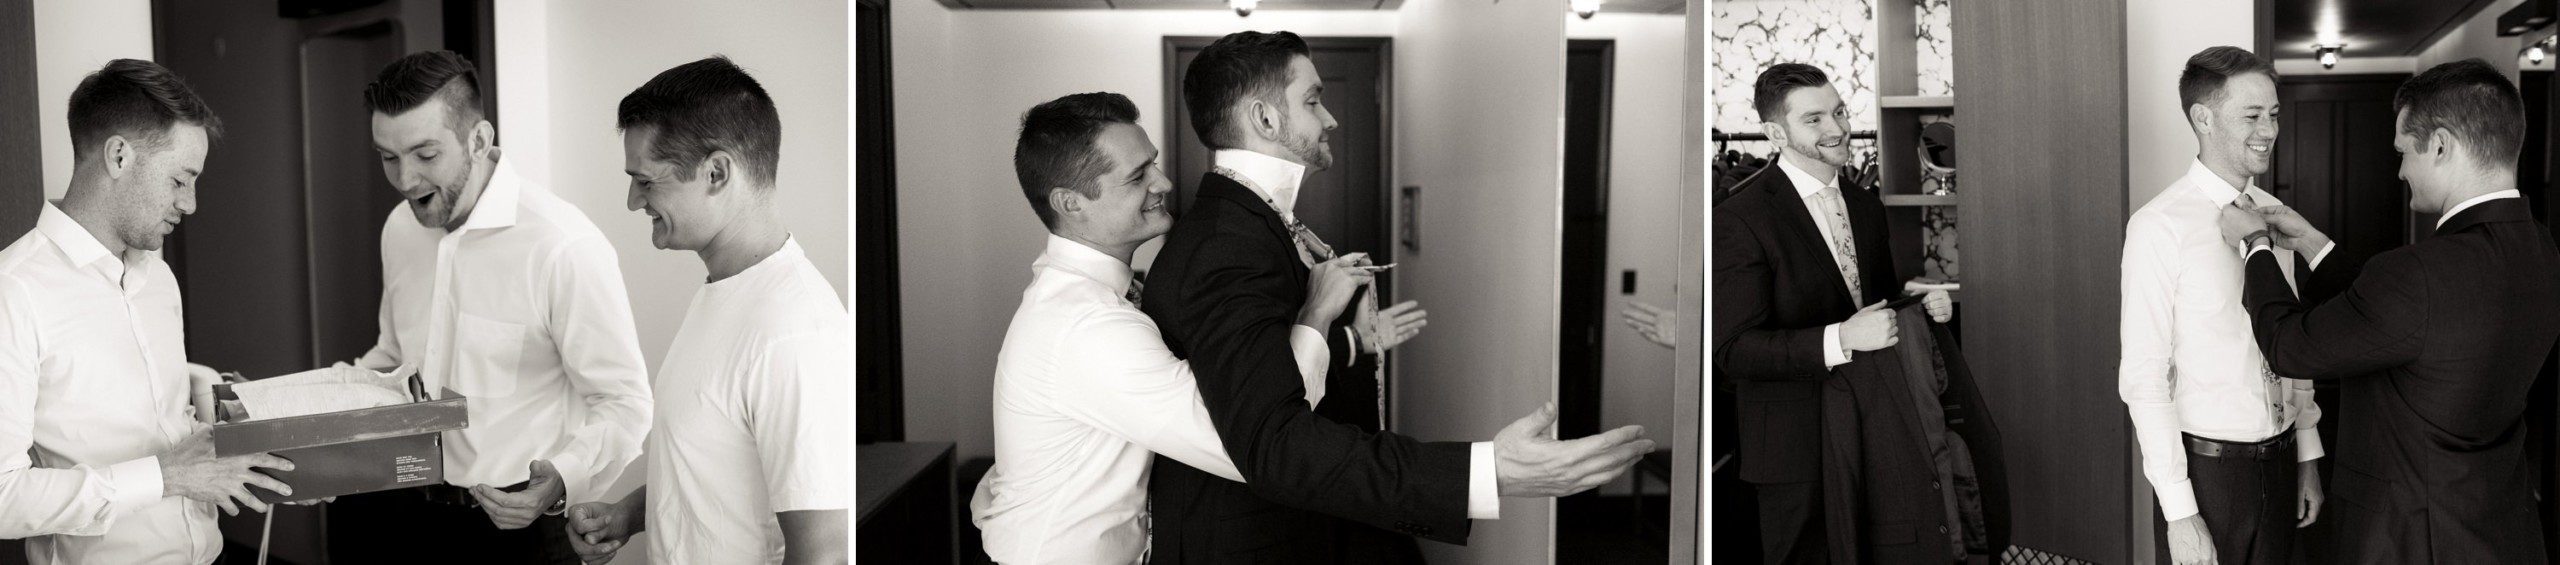 groomsmen getting ready photo